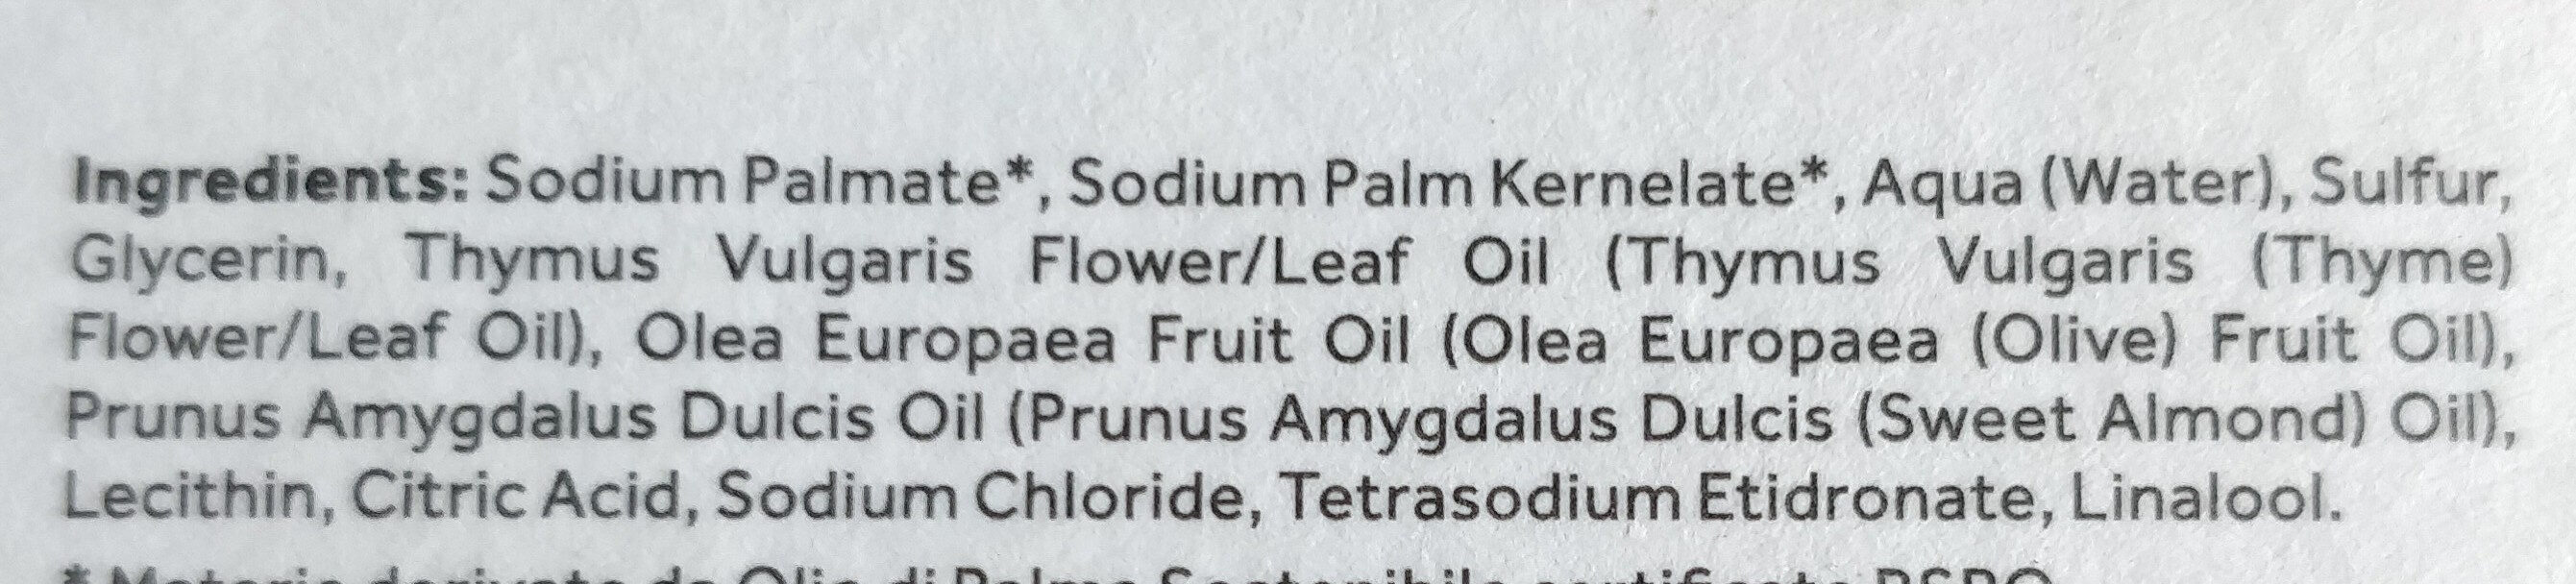 saponetta vegetale allo zolfo purificante - Ingredients - it